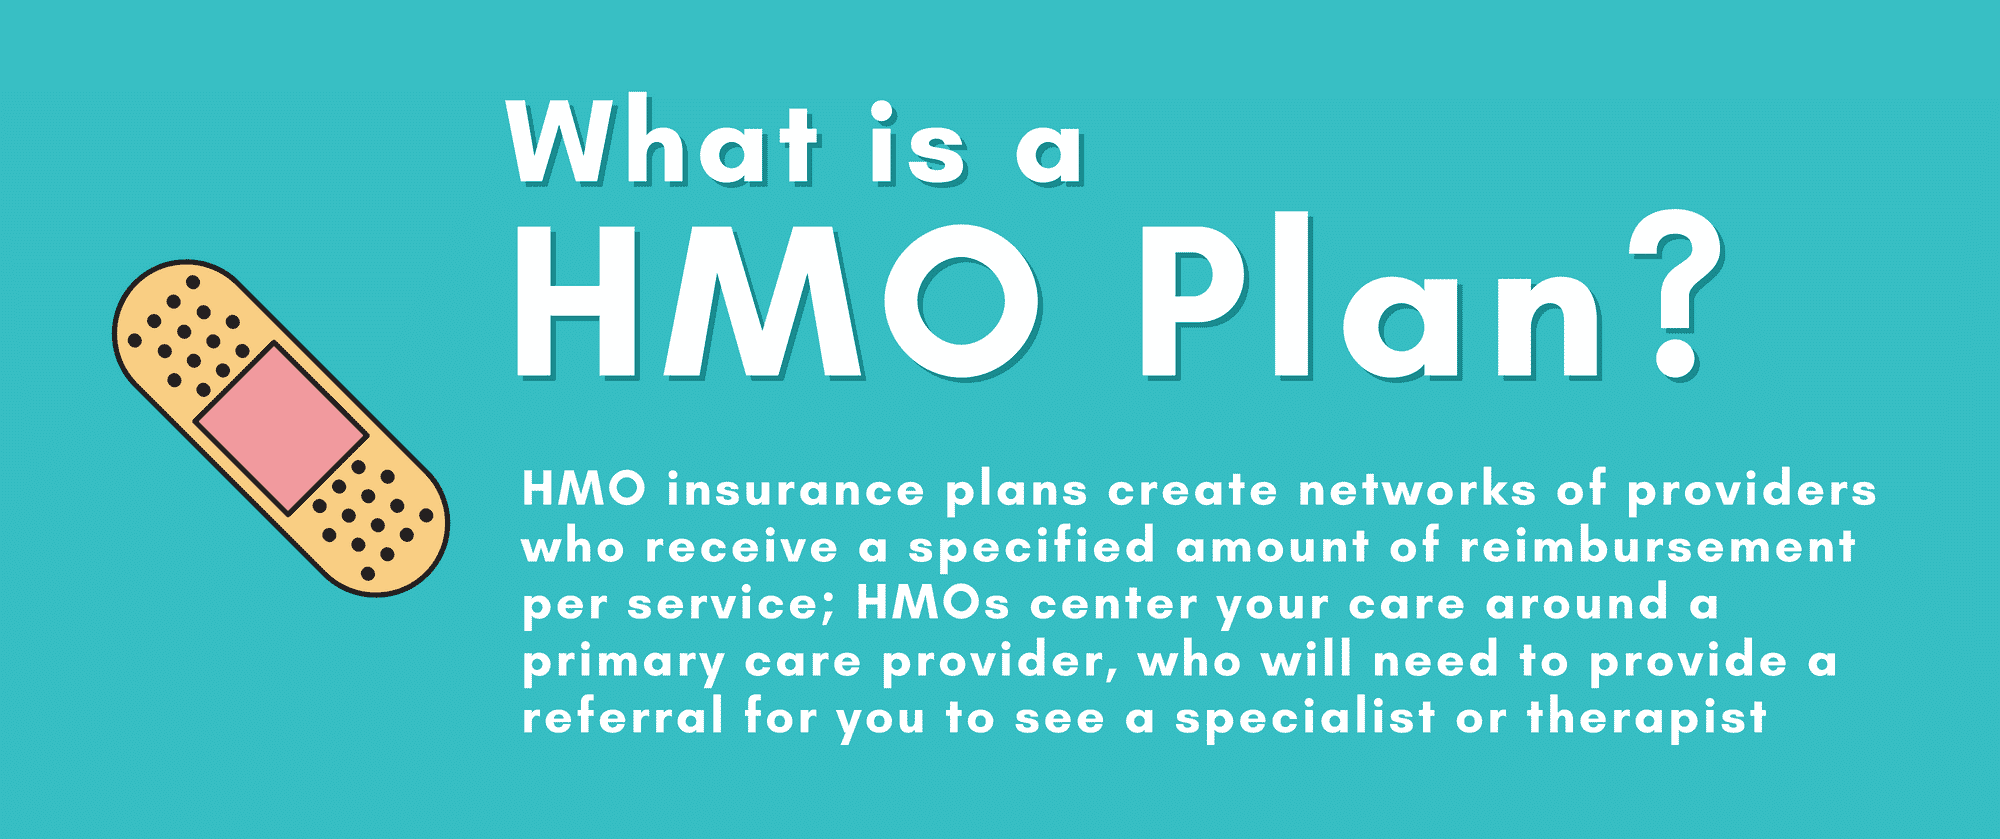 HMO Health Insurance Plan